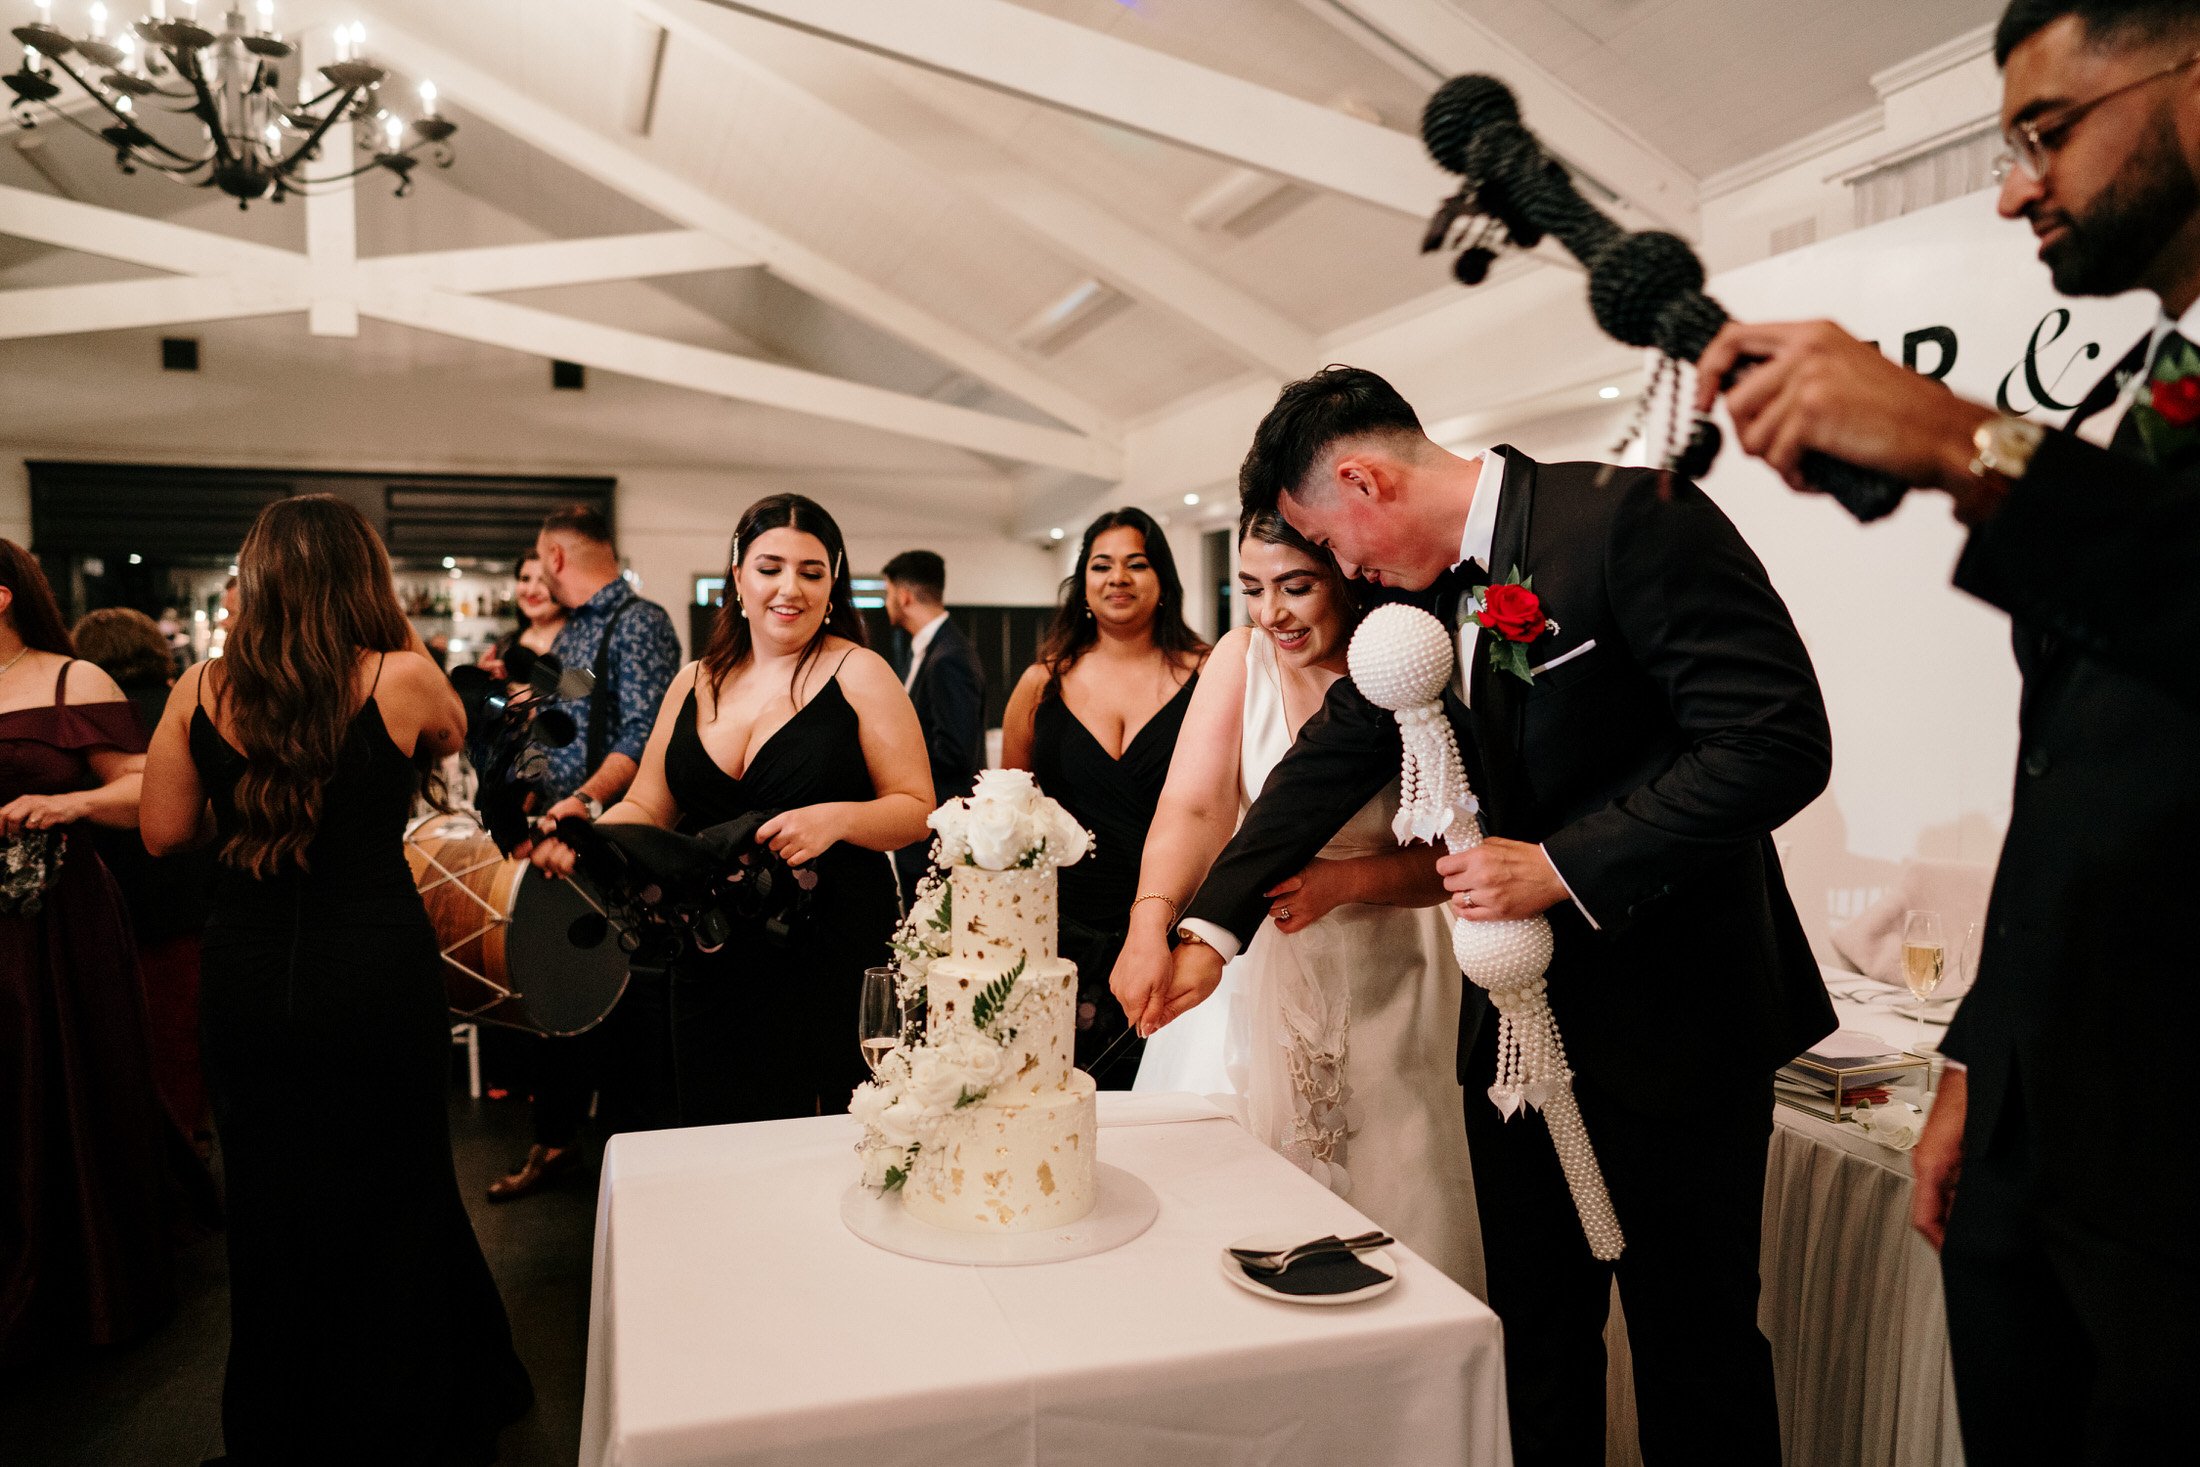 Auckland Wedding Photographer | Auckland Wedding Videographer | Auckland Wedding Venue | Bracu Estate Venue | South Auckland Venue | Wedding Reception | Middle Eastern Wedding Dancing